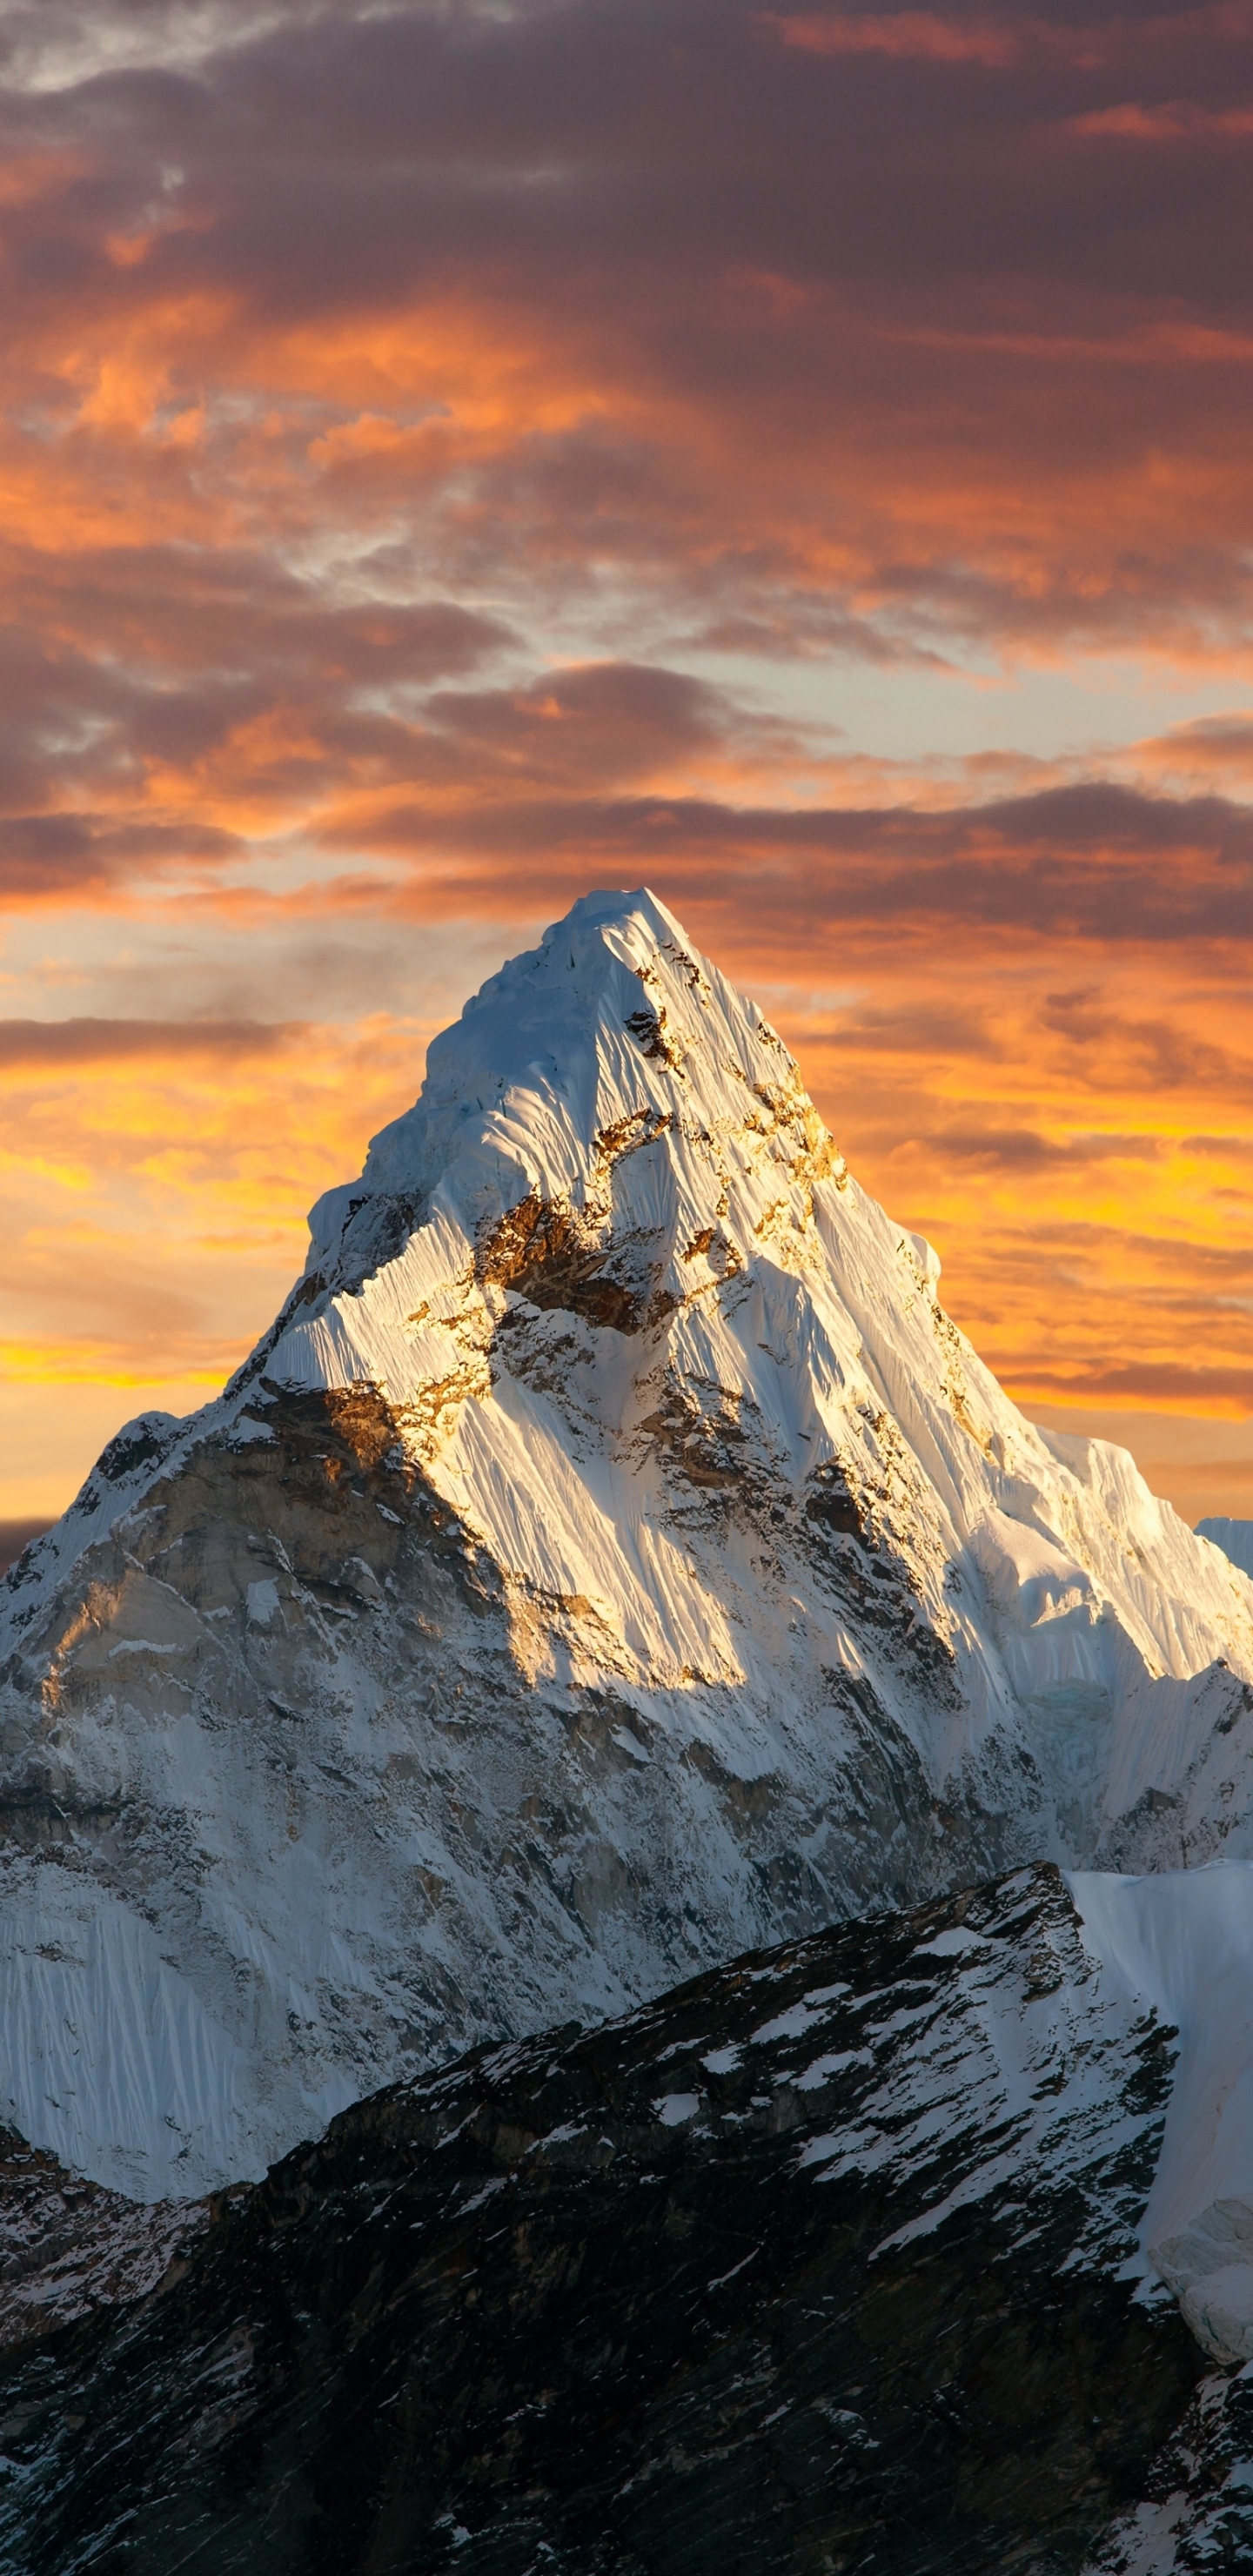 himalayas, earth, peak, nature, sunset, mountain, mountains lock screen backgrounds